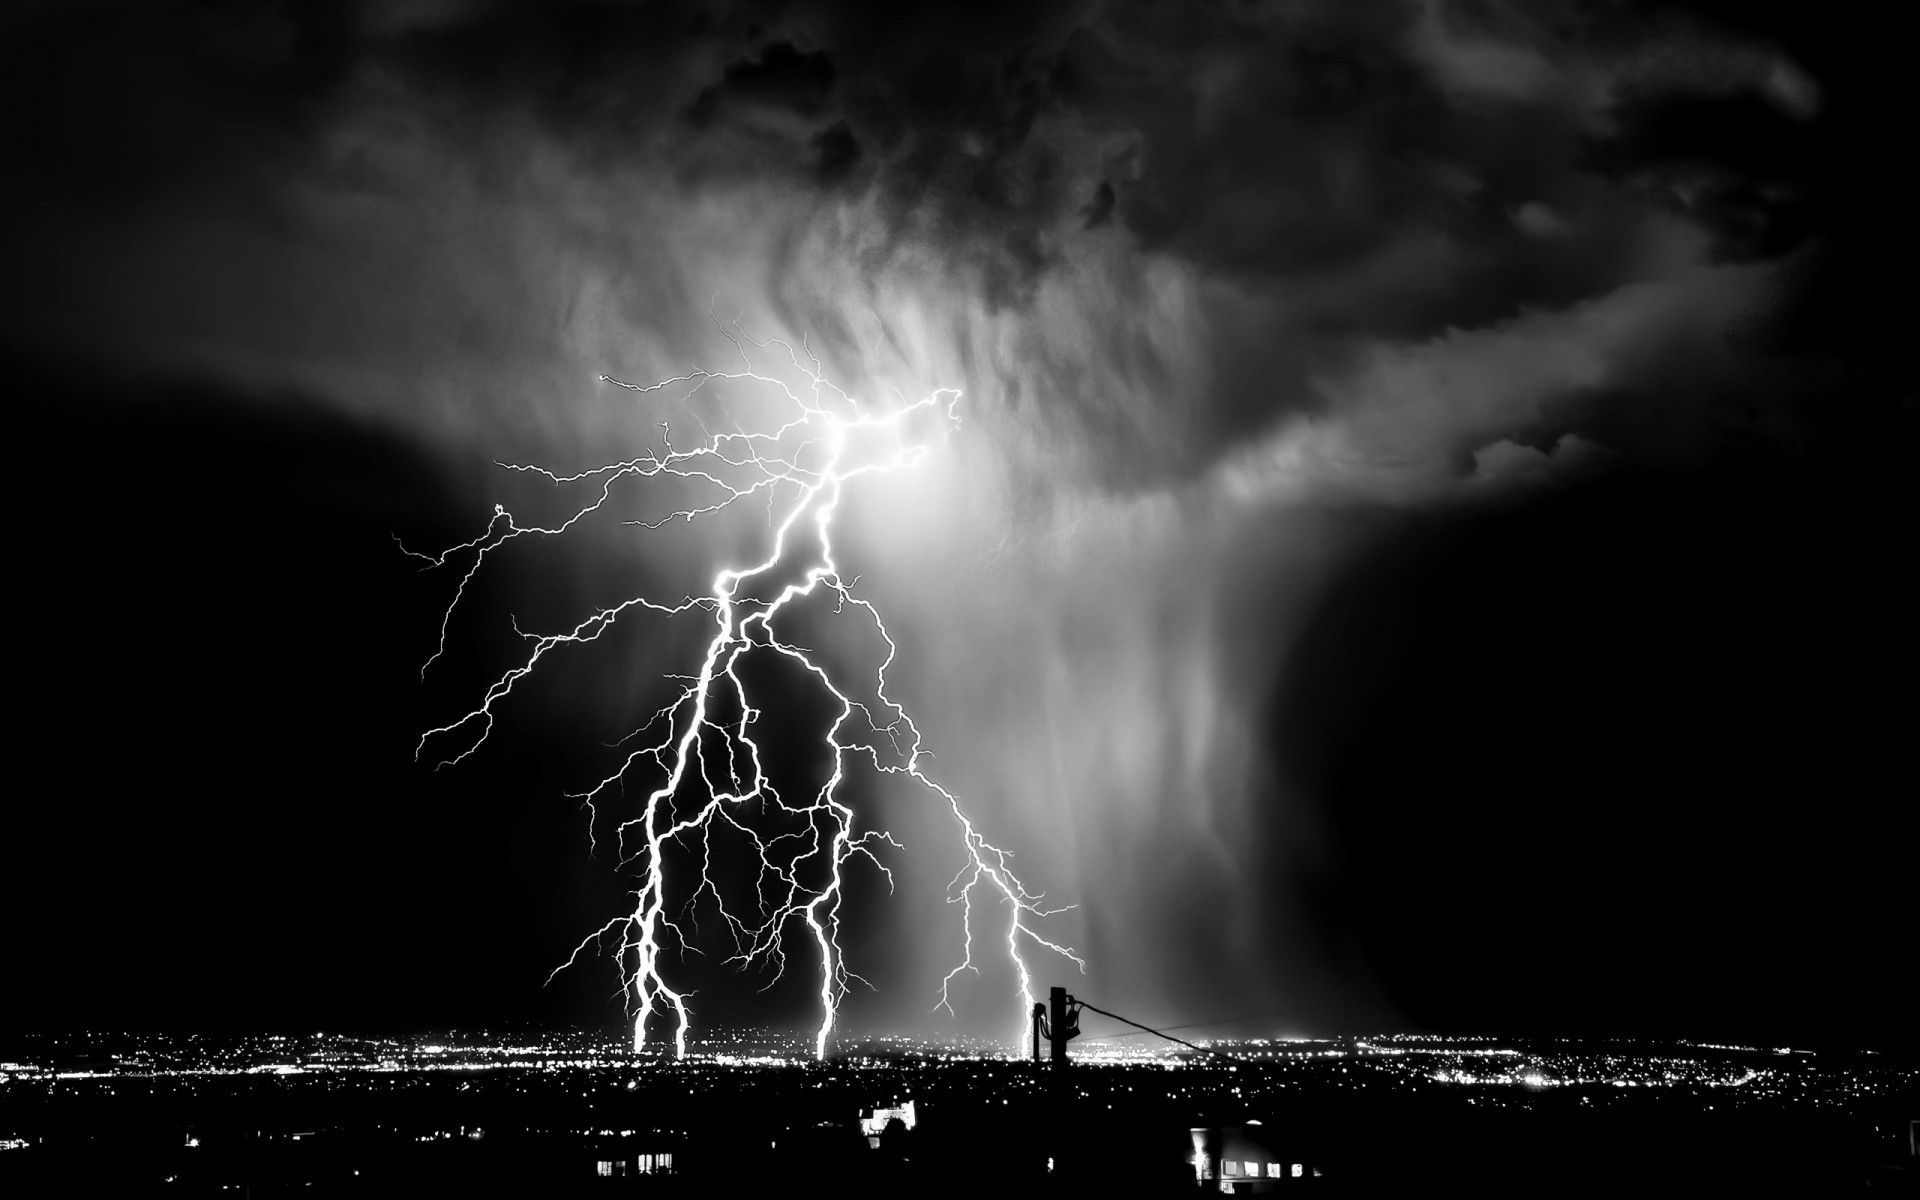 Massive Lightning. Android wallpaper. Lightning photography, Rain wallpaper, Lightning cloud